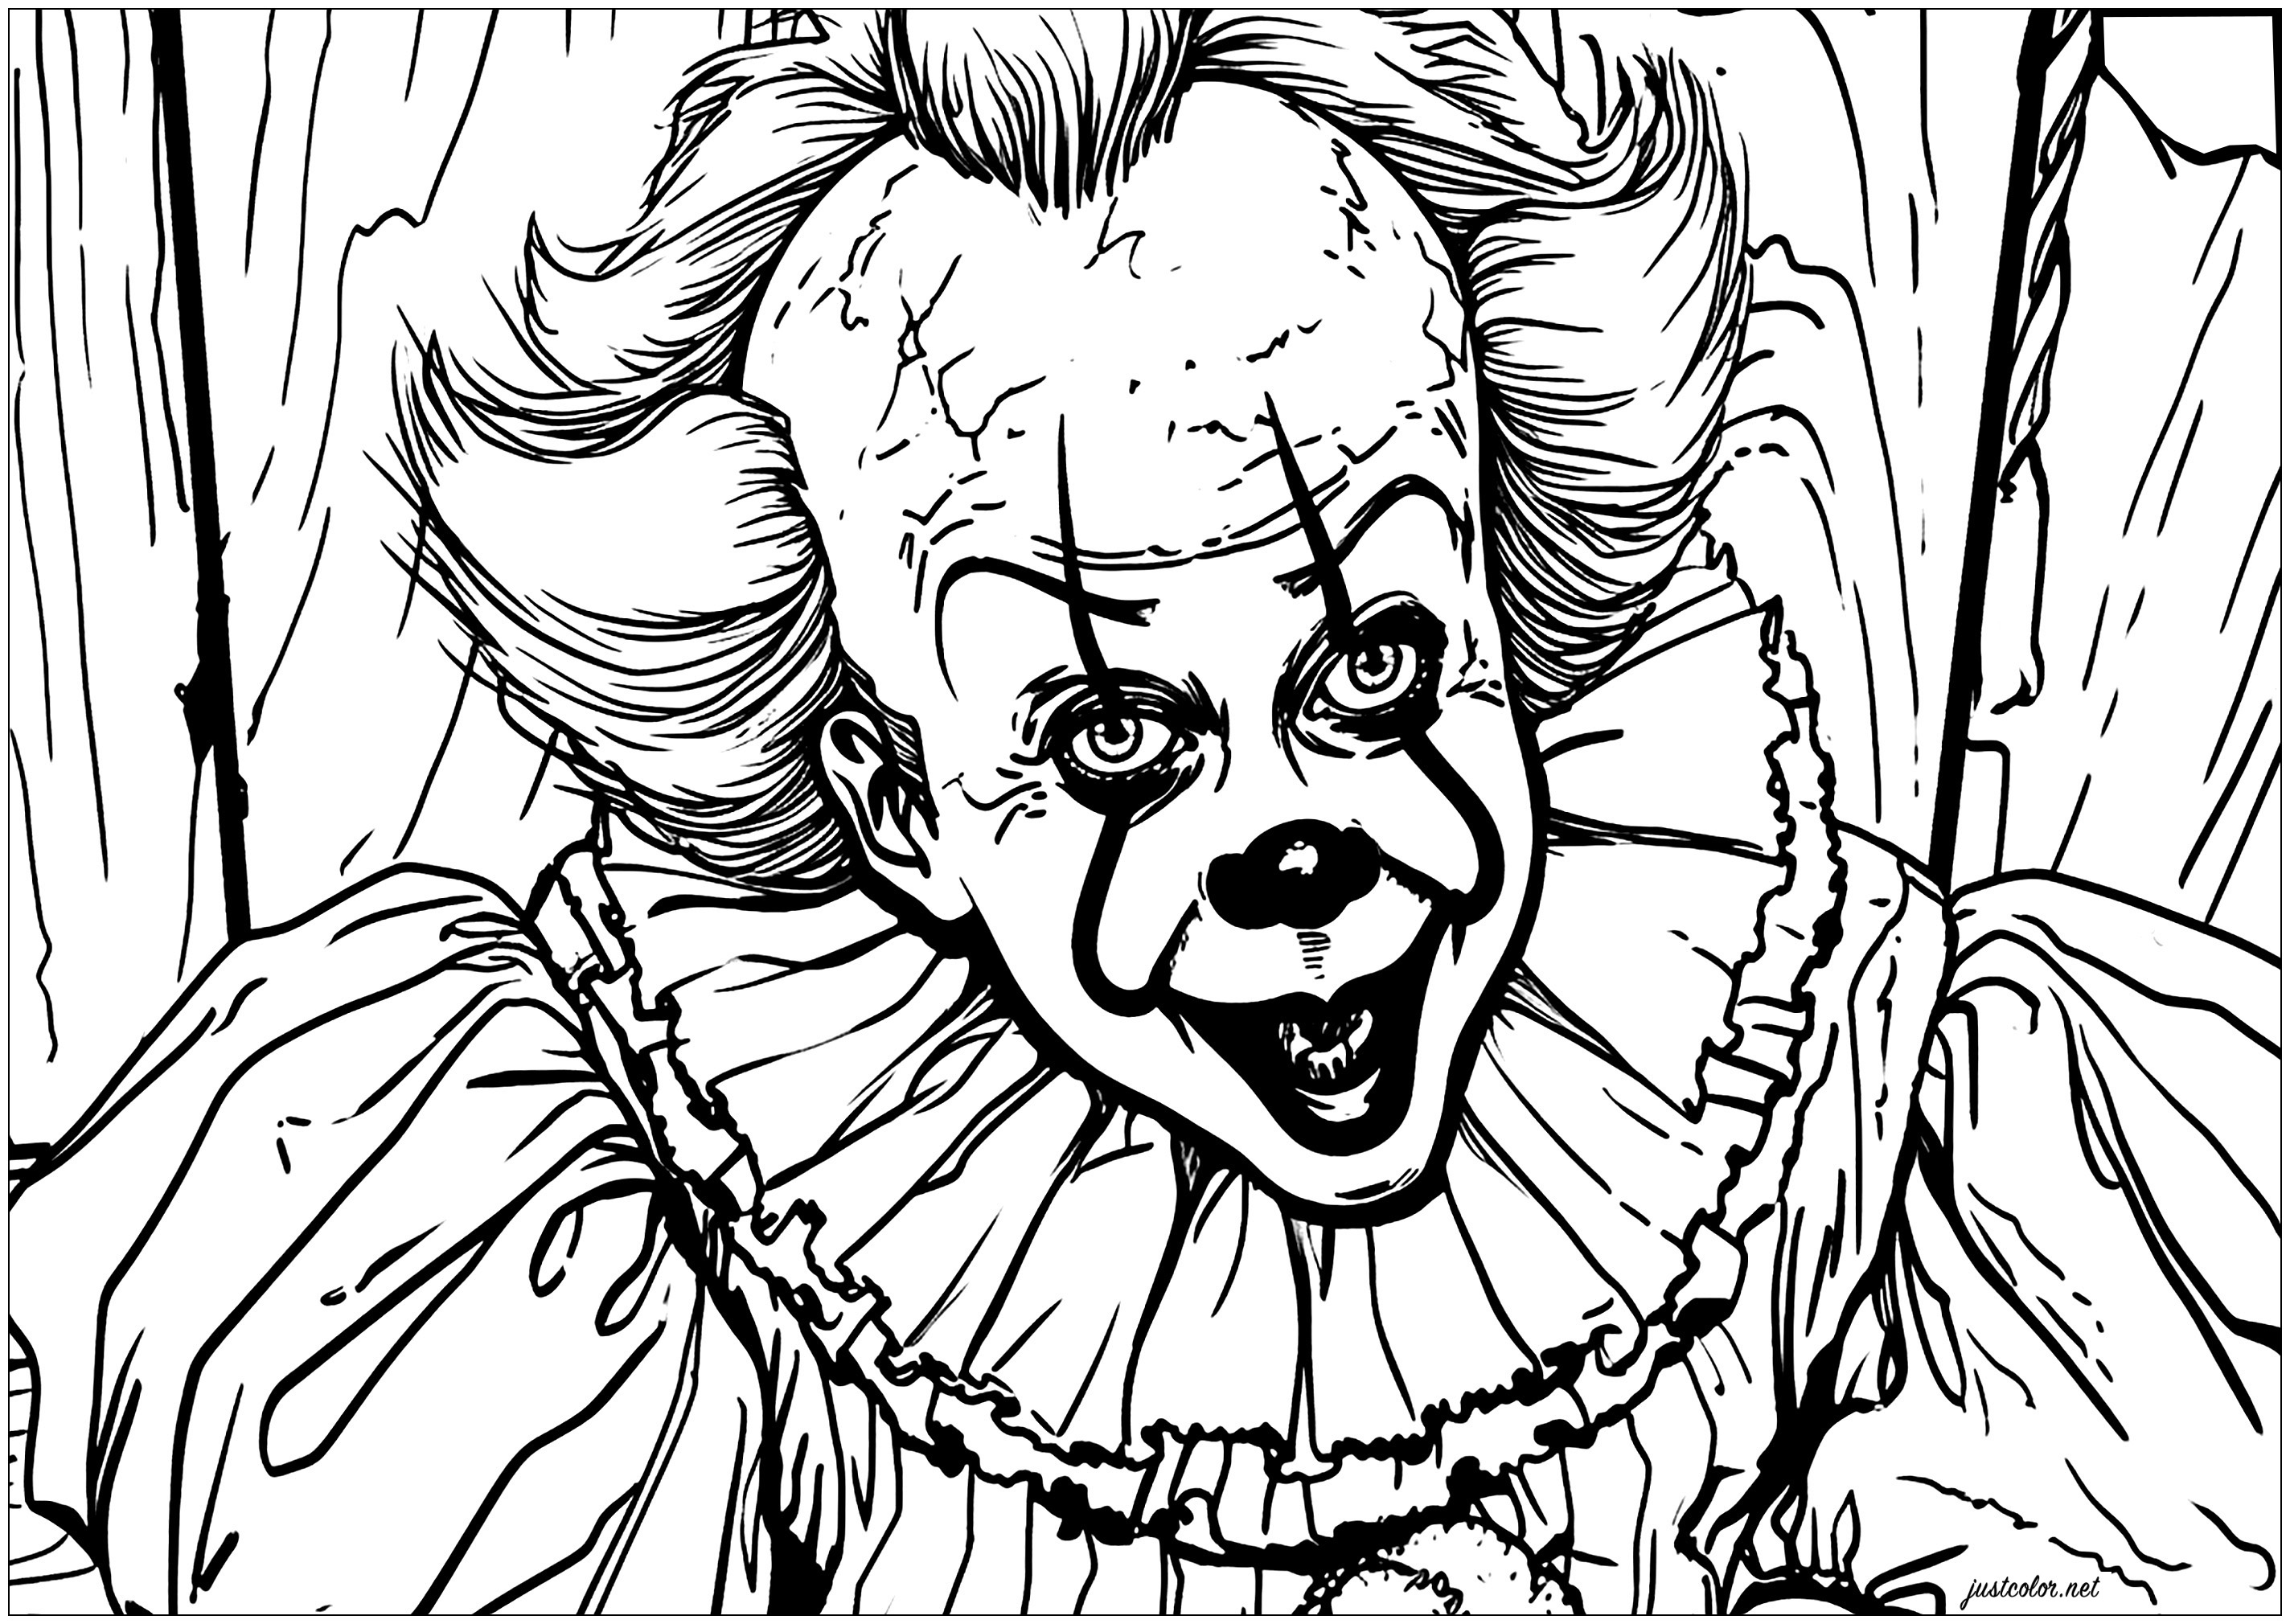 Pennywise il clown danzante, dal film IT di Stephen King